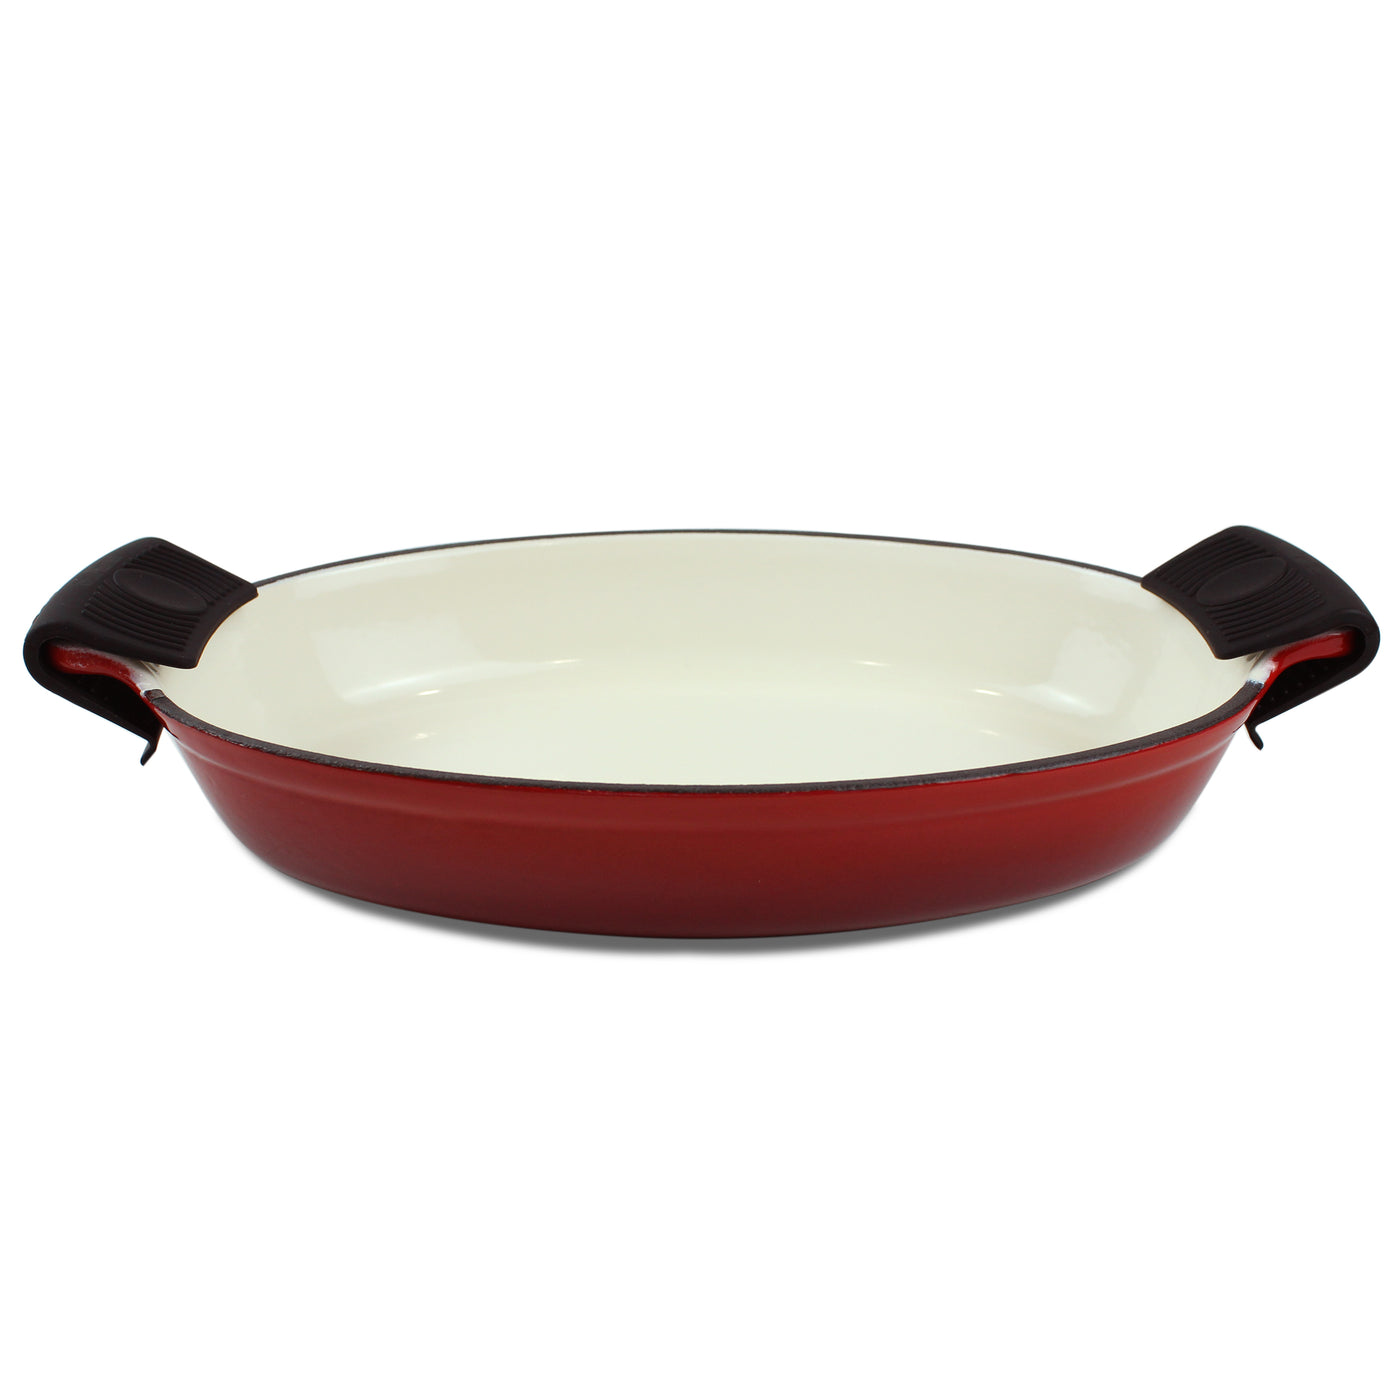 1.58 Qt (1,5 L) Enameled Cast Iron Oval Roaster, Lasagna Pan, Roasting Pan - Red + 2 Potholders